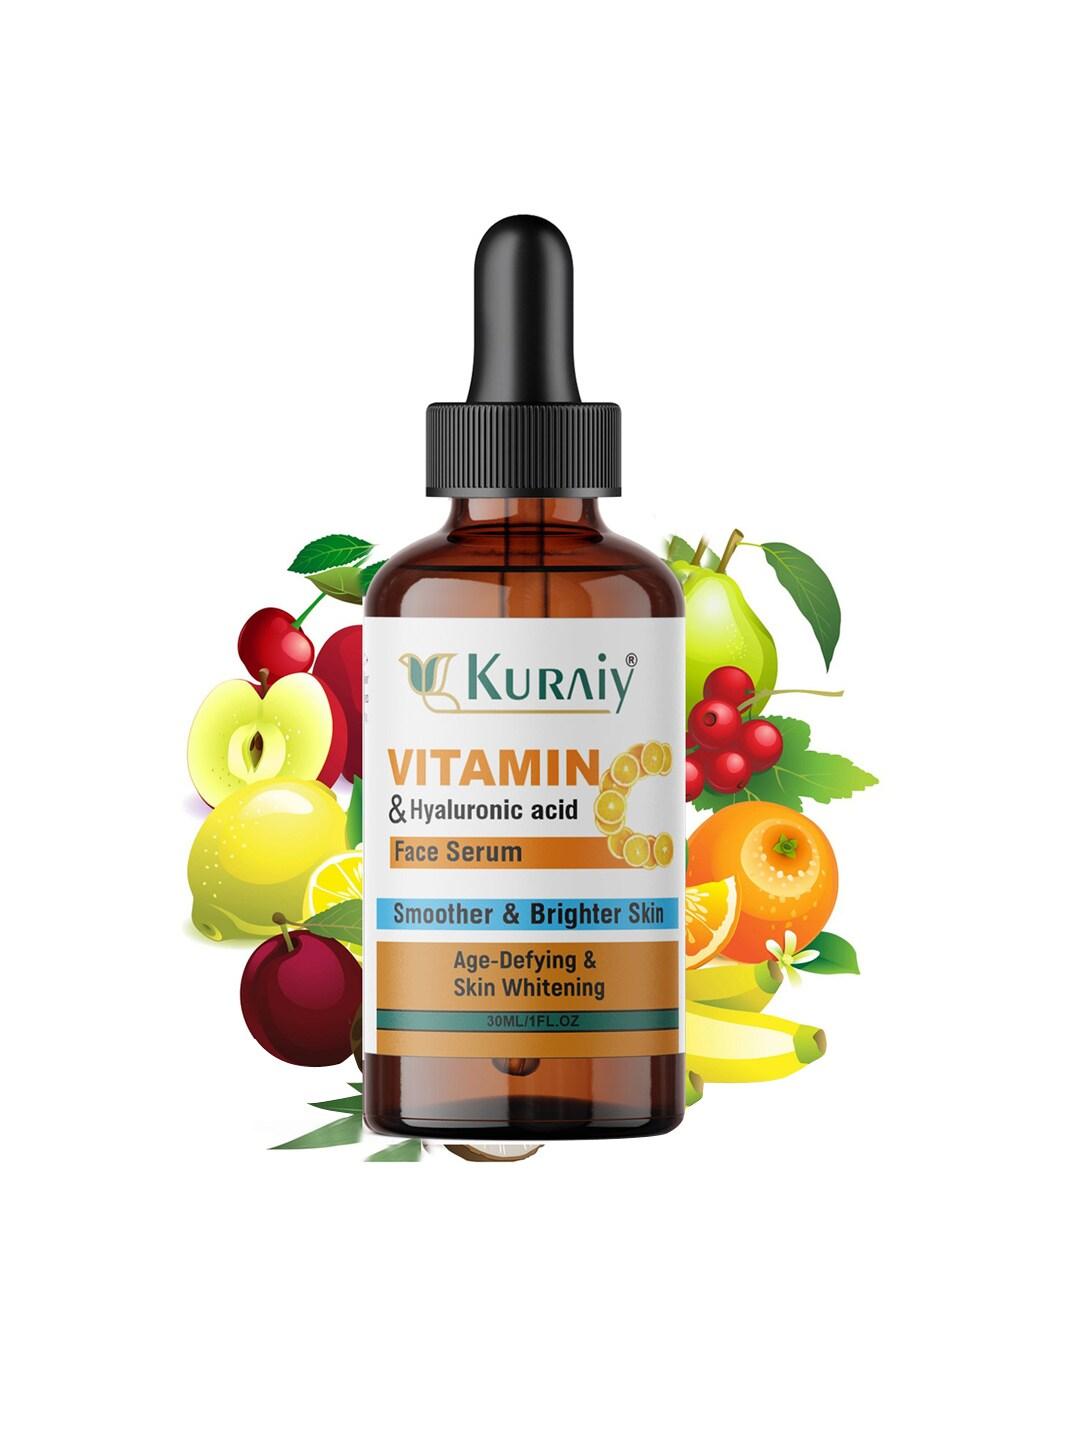 KURAIY Age Defying & Skin Whitening Vitamin C Face Serum with Hyaluronic Acid - 30 ml